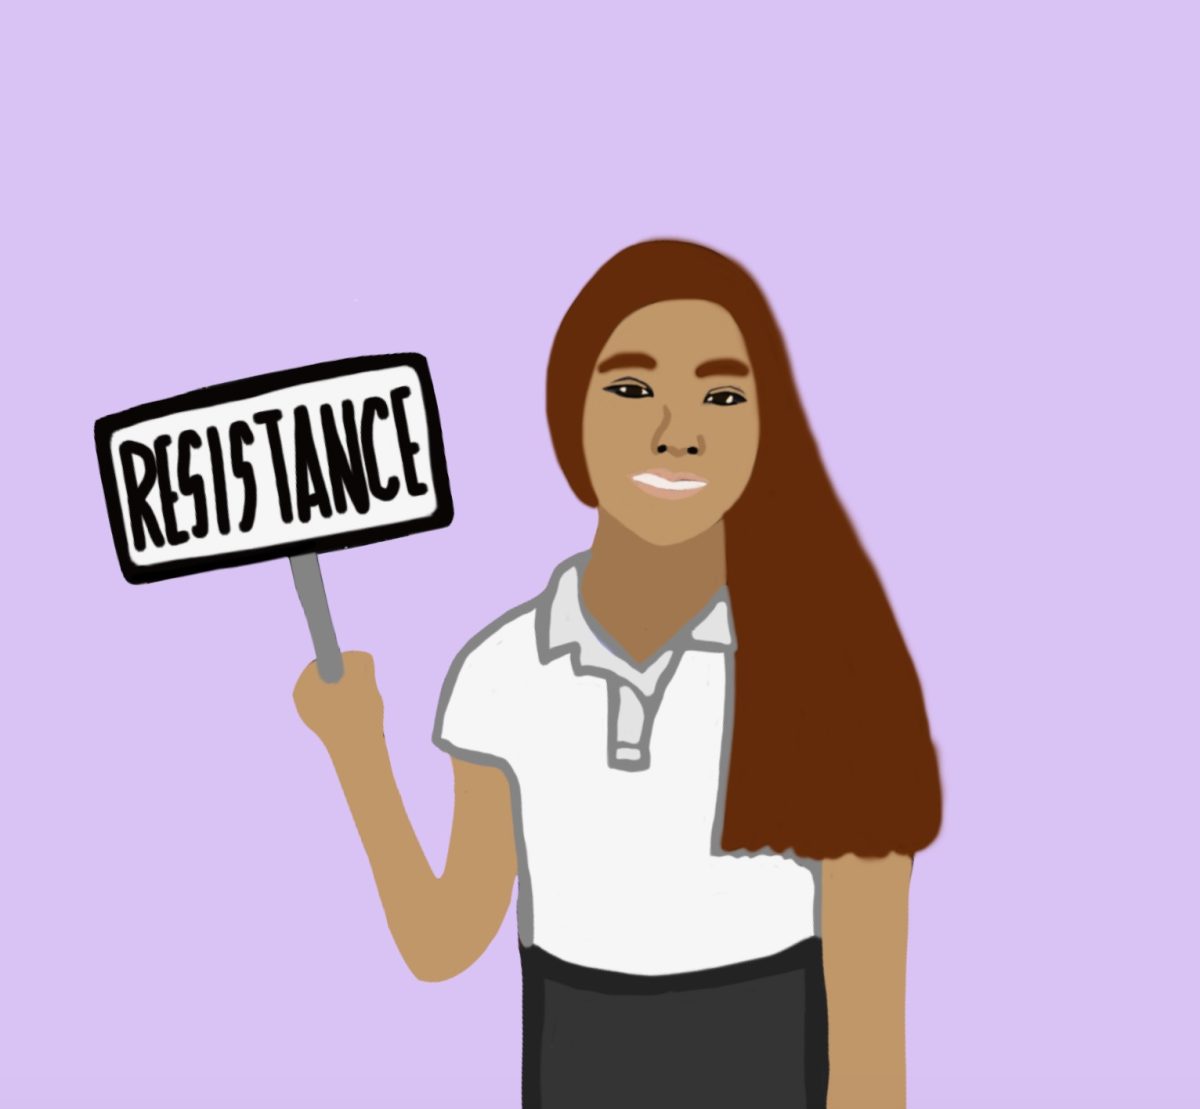 Vive la resistance!